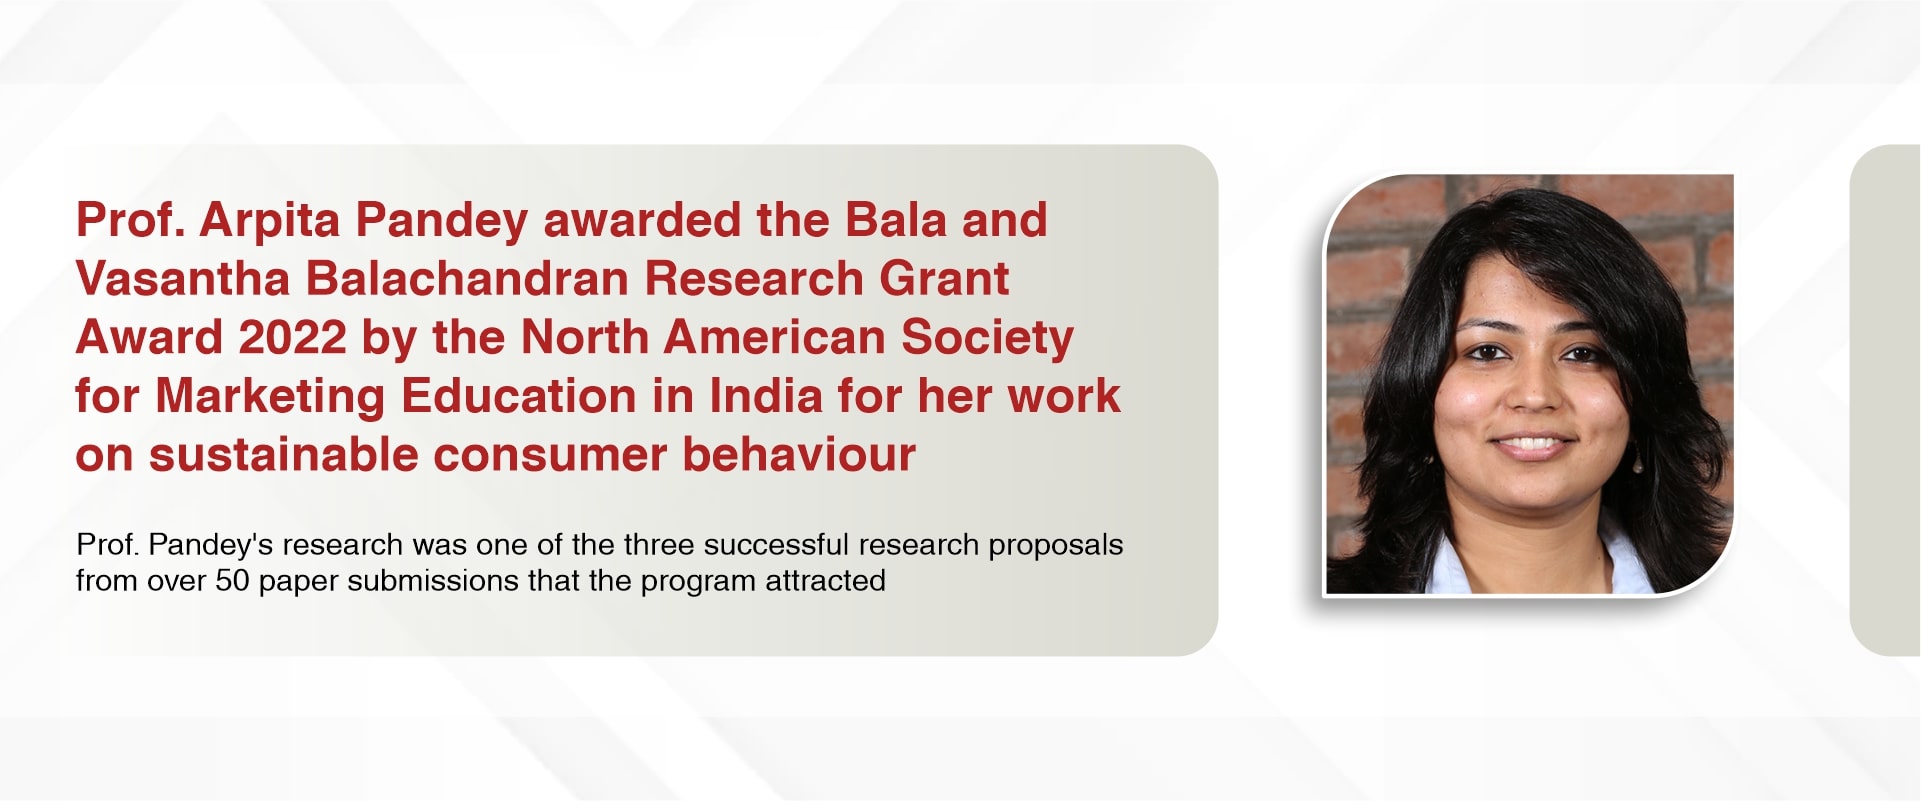 Prof. Arpita Pandey awarded the Bala and Vasantha Balachandran Research Grant Award 2022